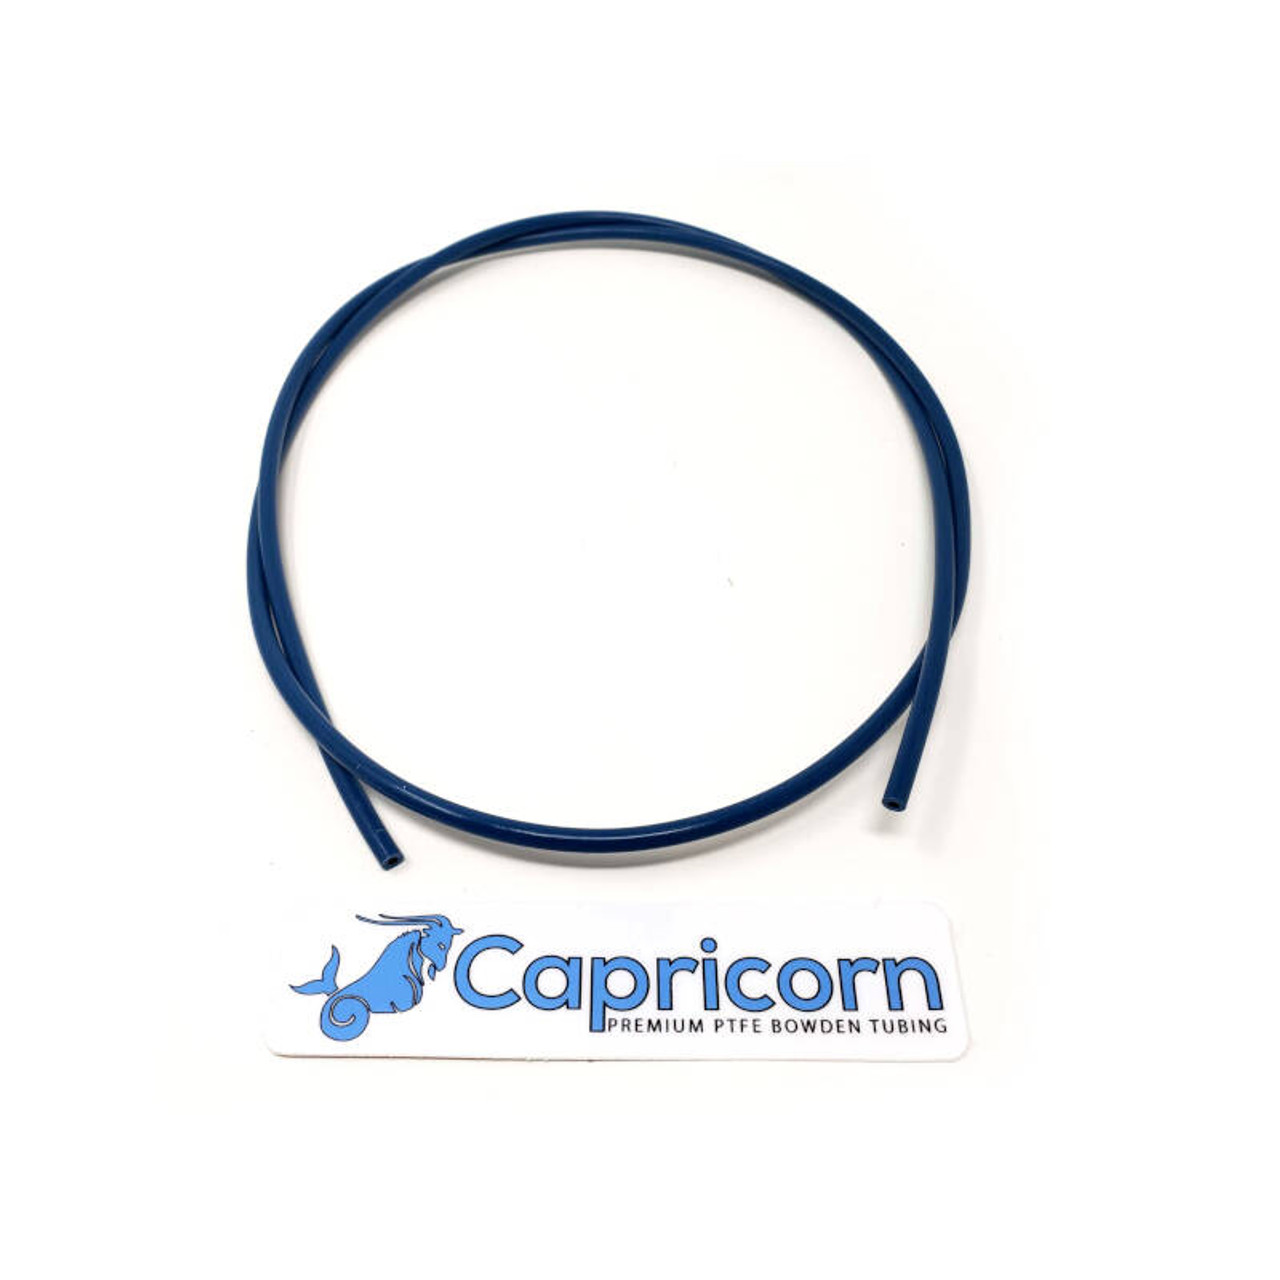 Capricorn XS PTFE Tubing - 1.75mm